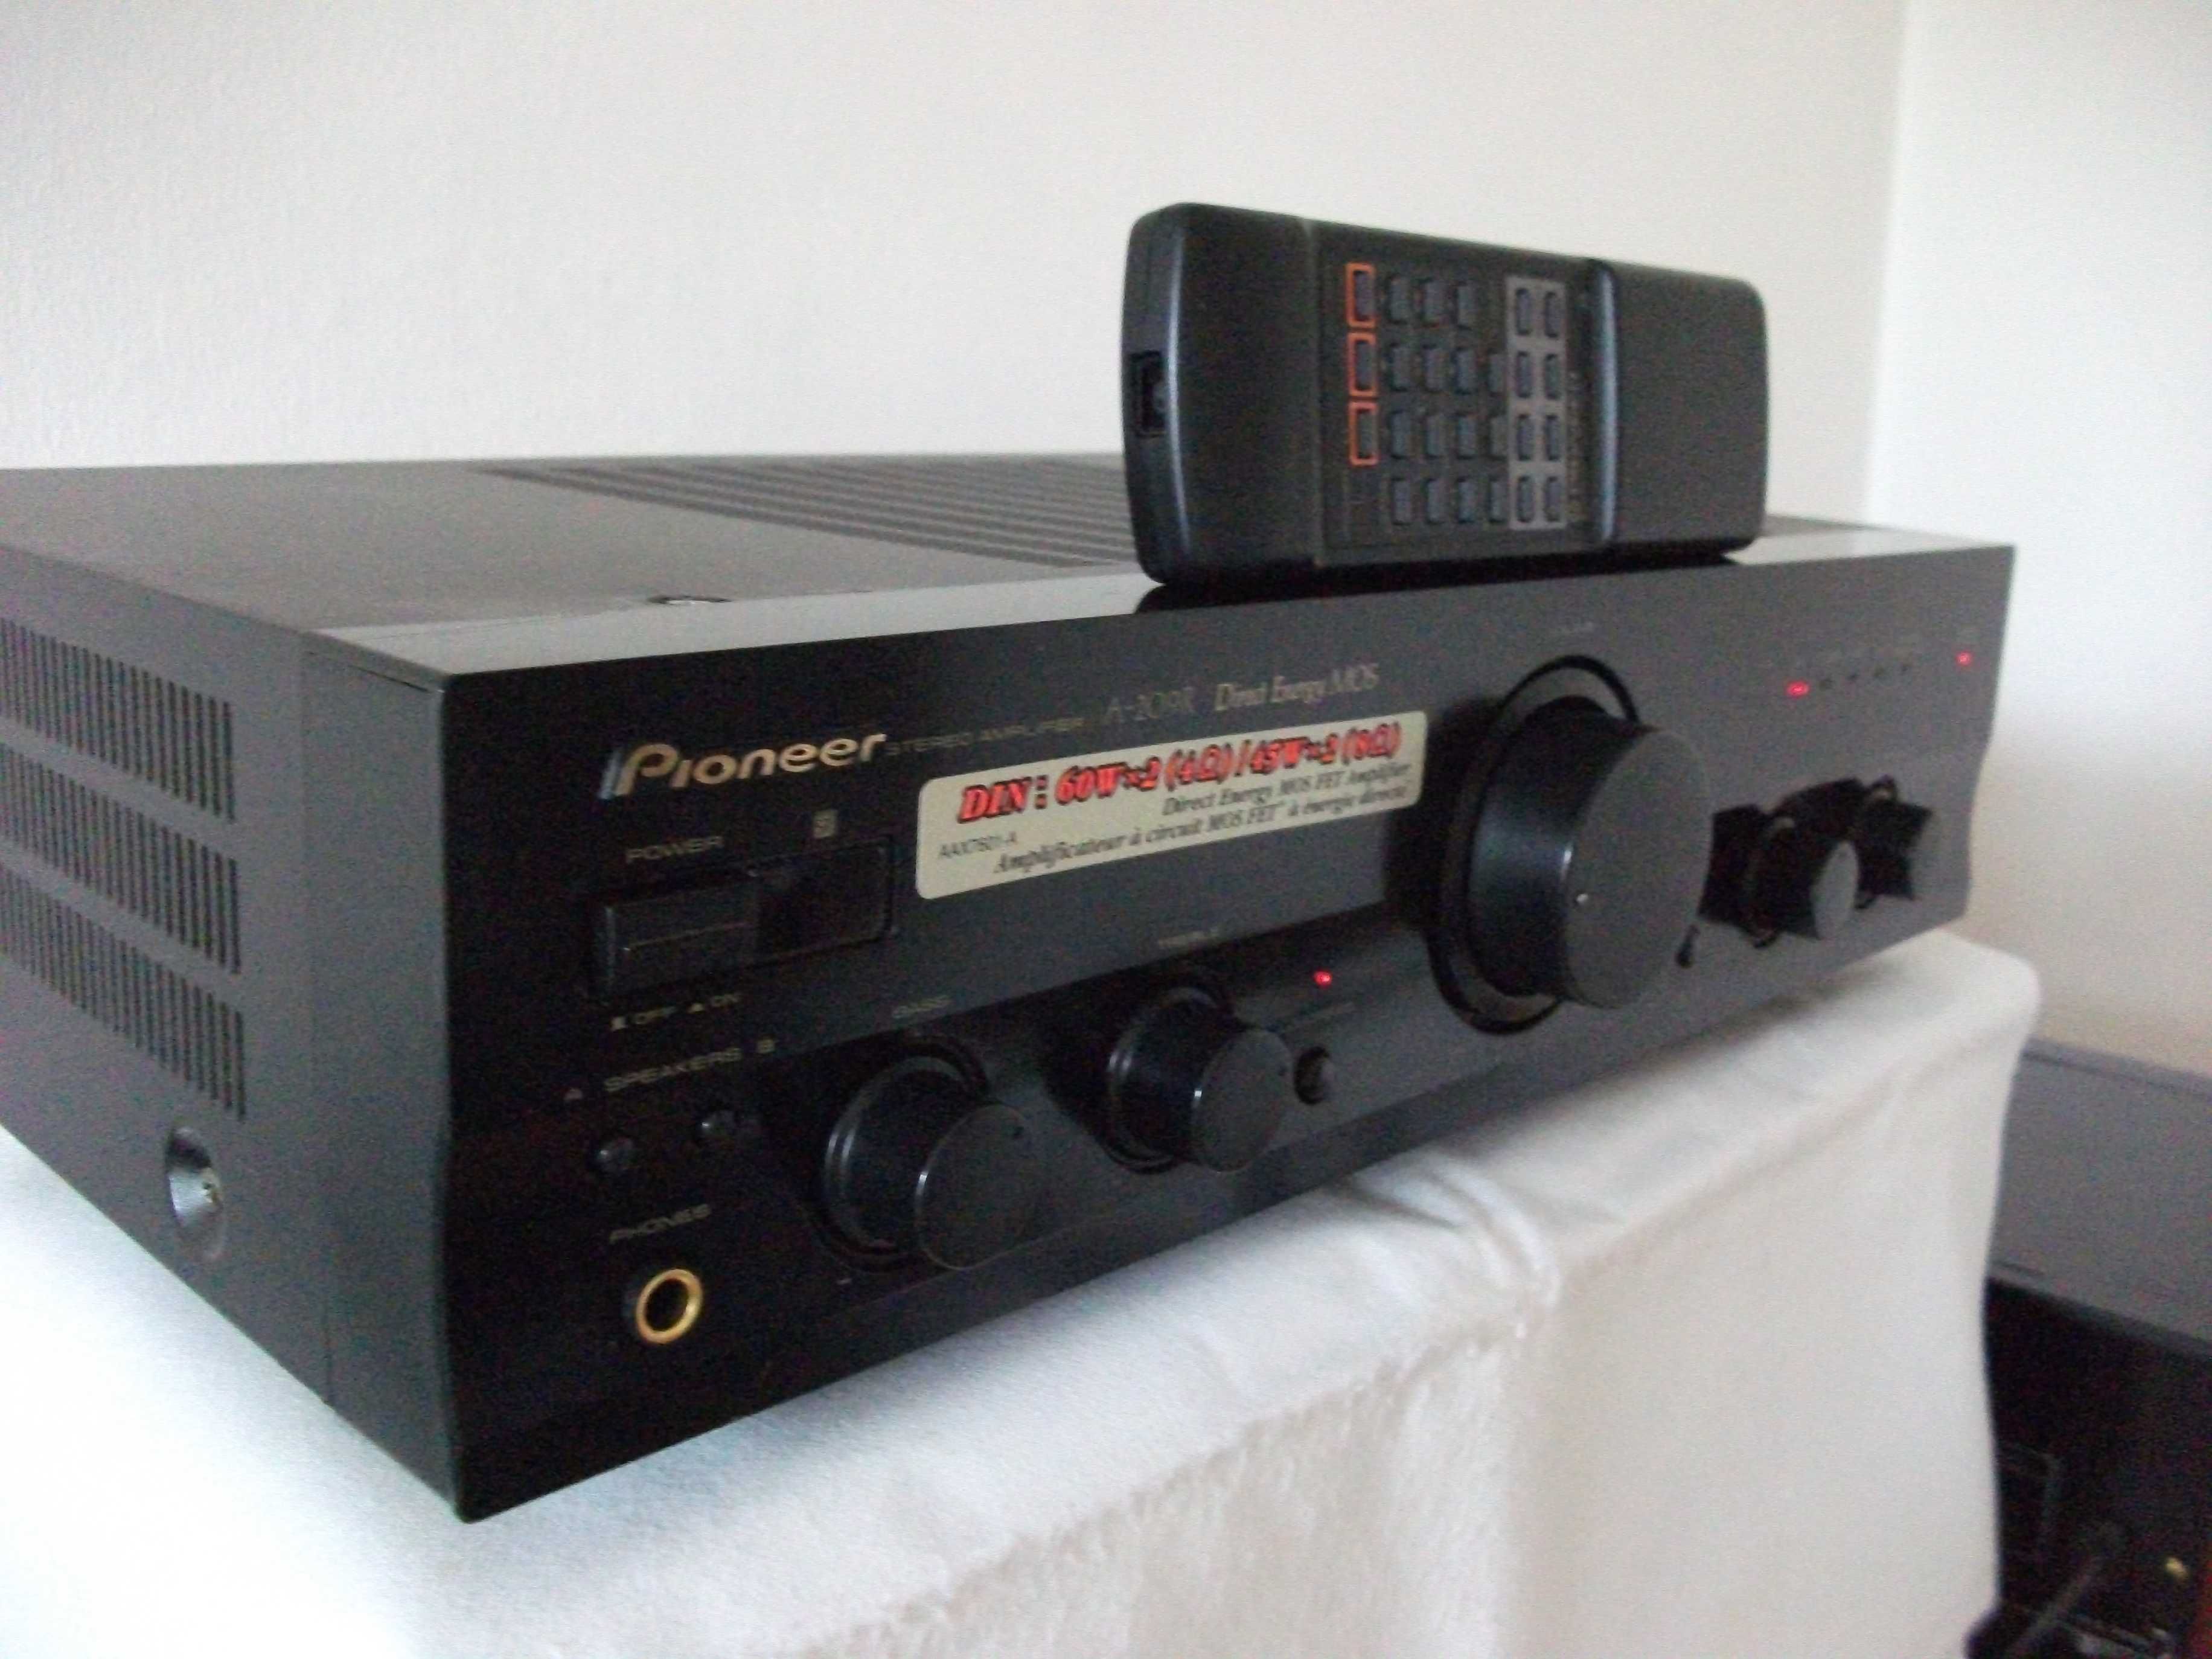 Amplificator Pioneer A 209R cu telecomanda